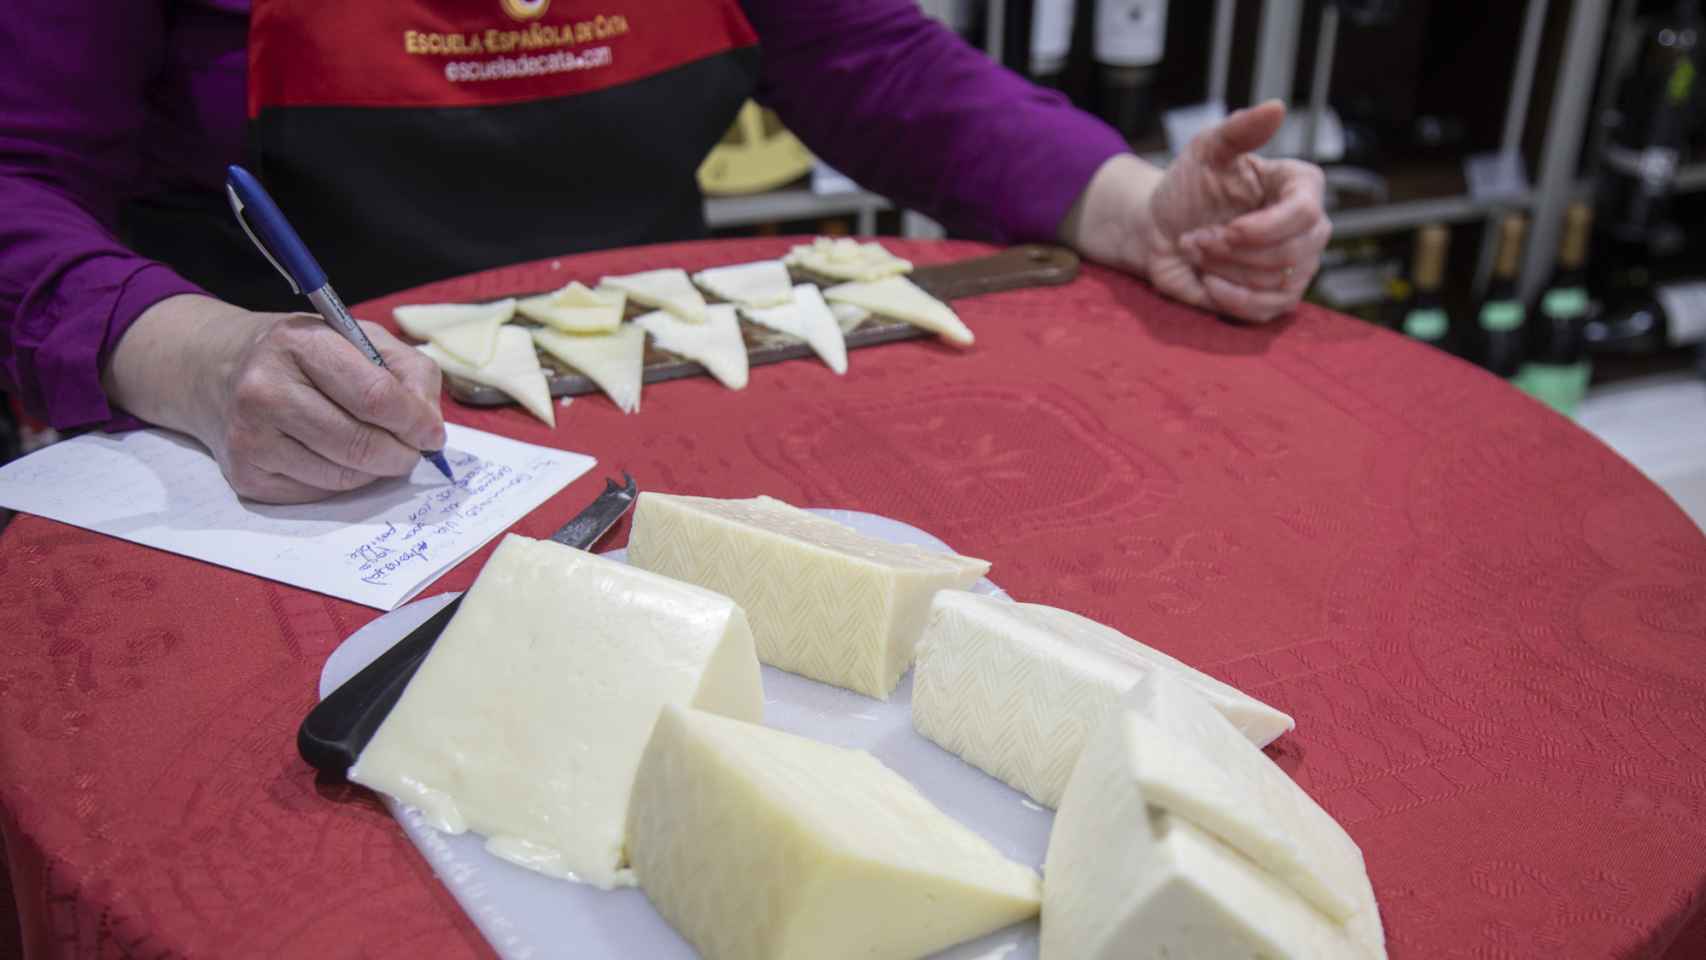 Carmen Garrobo anota hasta el último detalle de cada queso tierno probado.